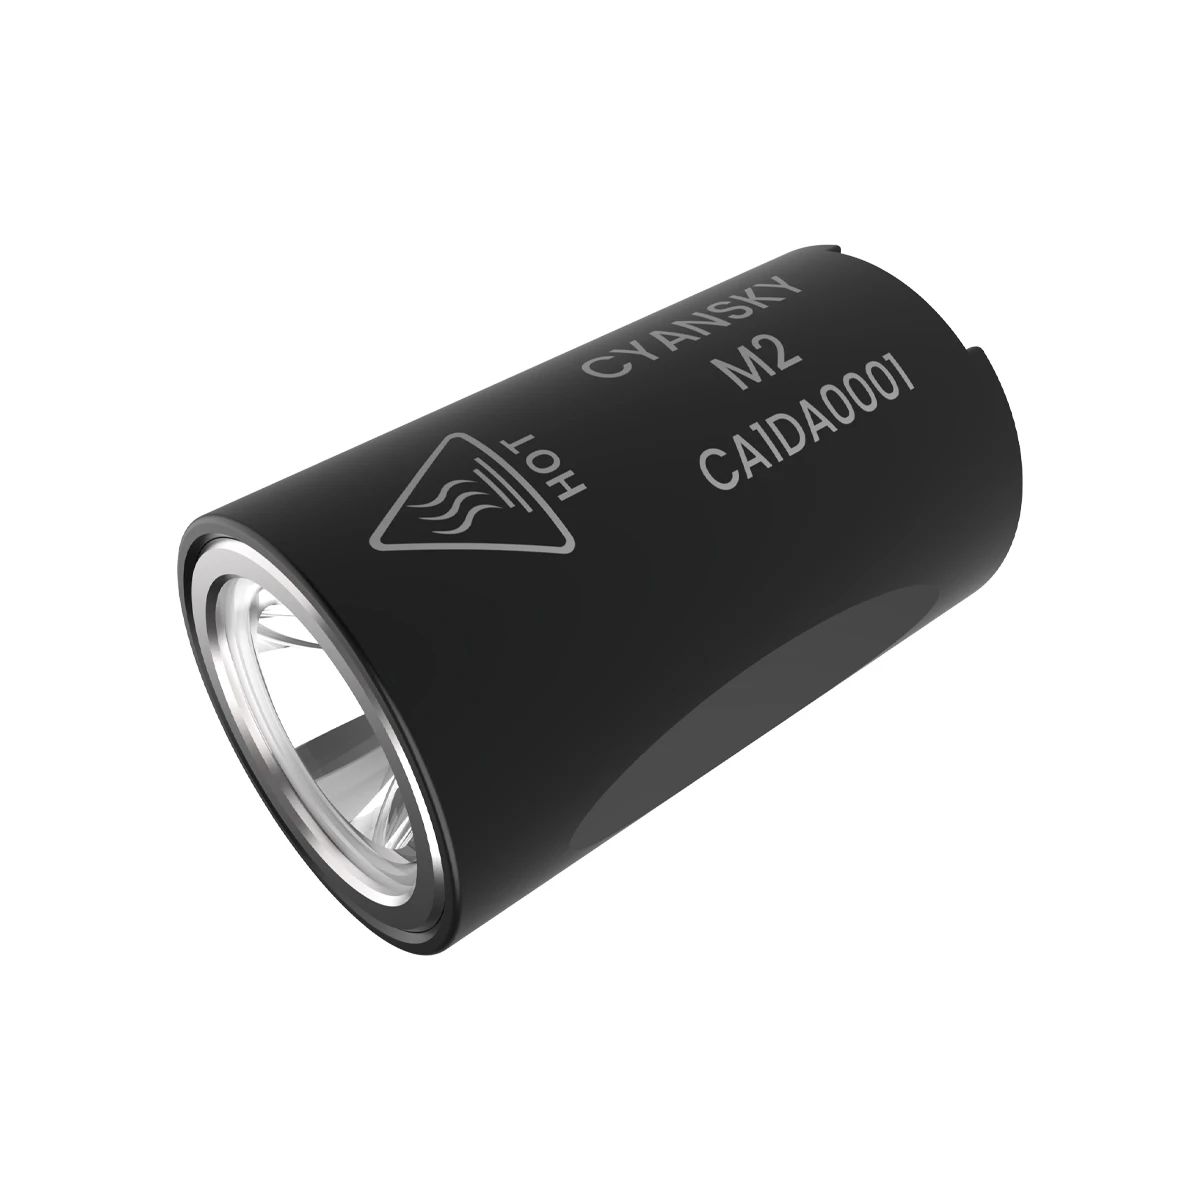 

CYANSKY M2 CREE XP-E2 LED Mini EDC Keychain Flashlight 200 Lumens 83M USB Rechargeable Ultra Compact Torch Portable Pocket Light